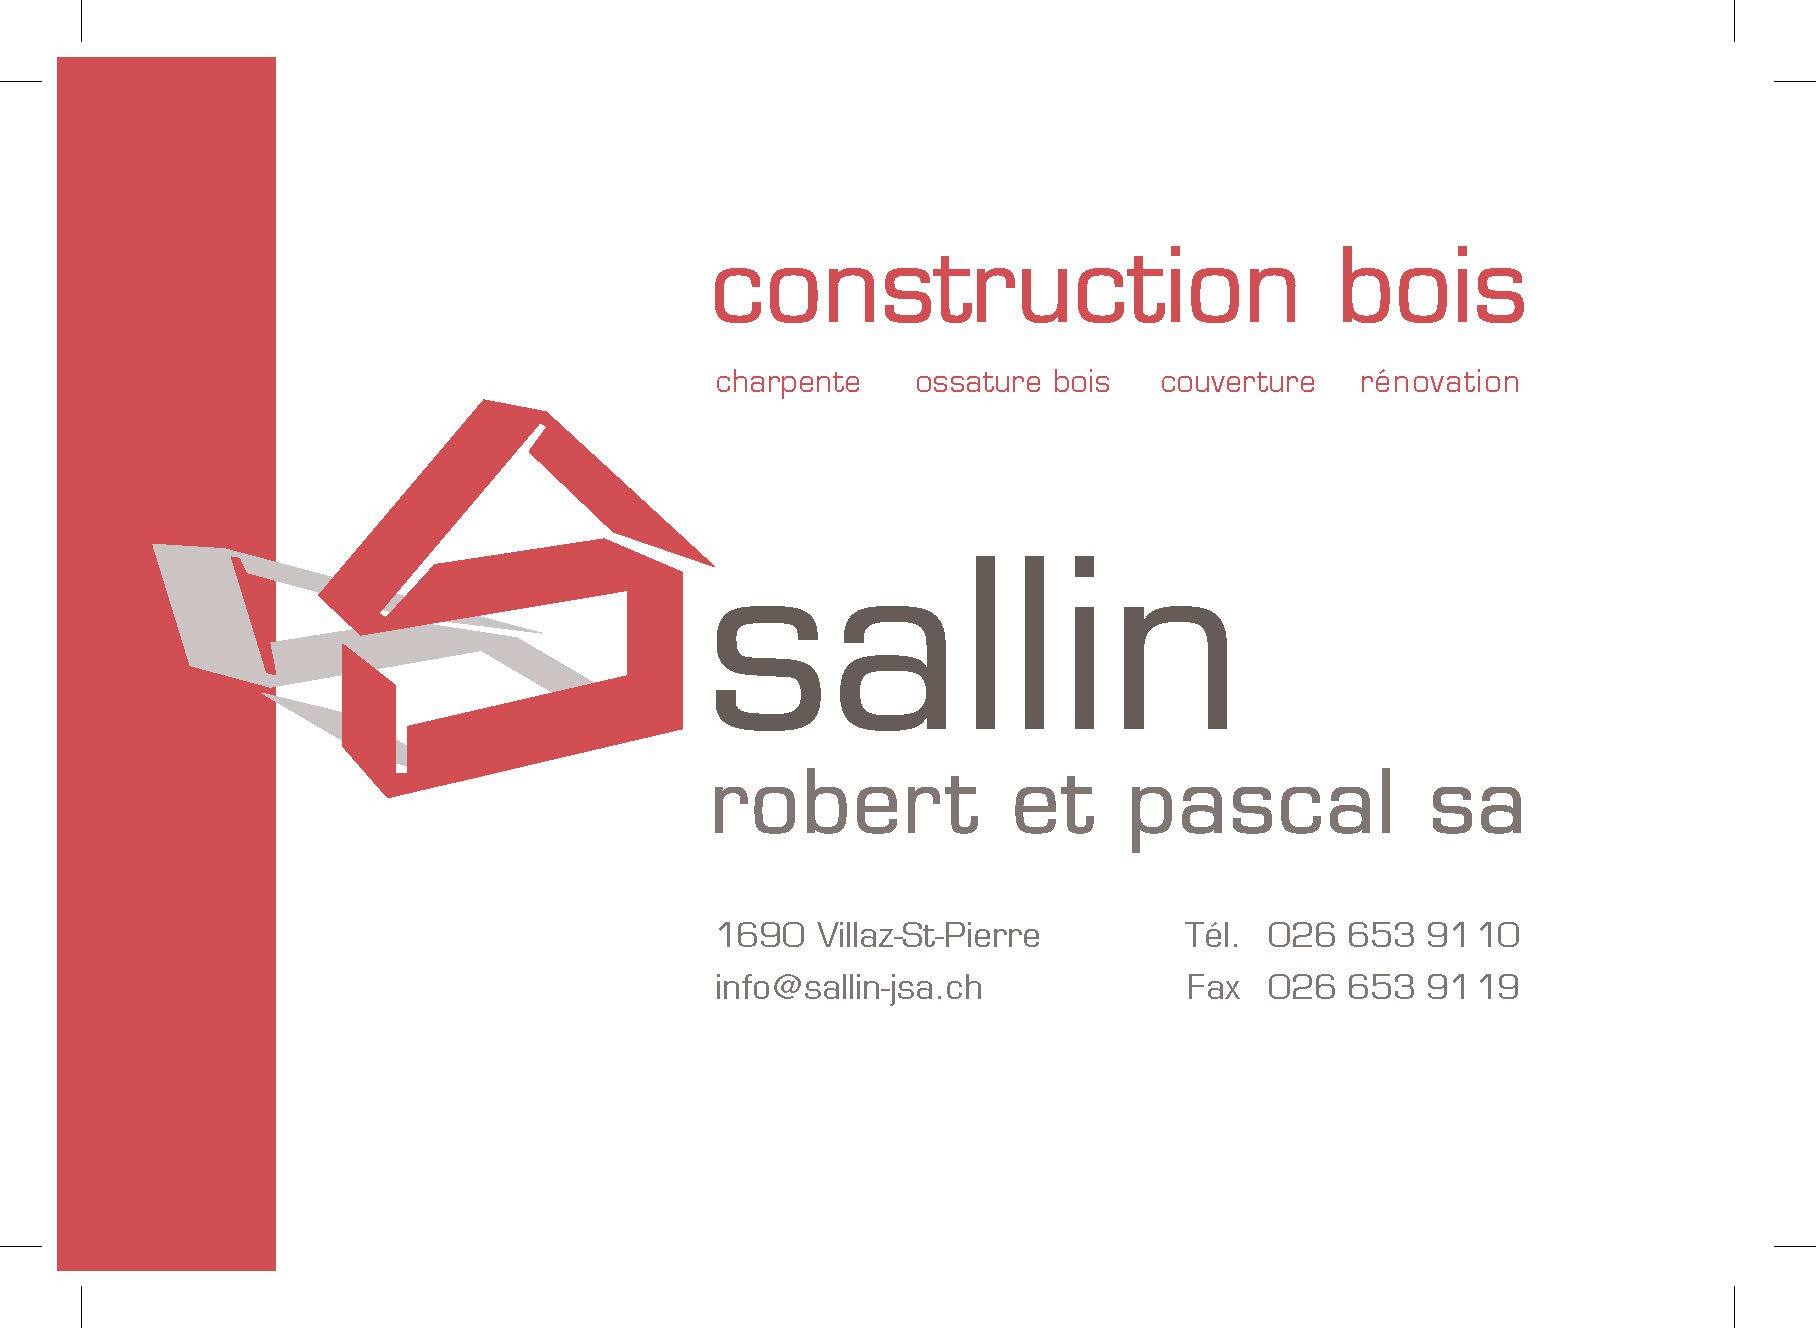 Robert et Pascal Sallin SA